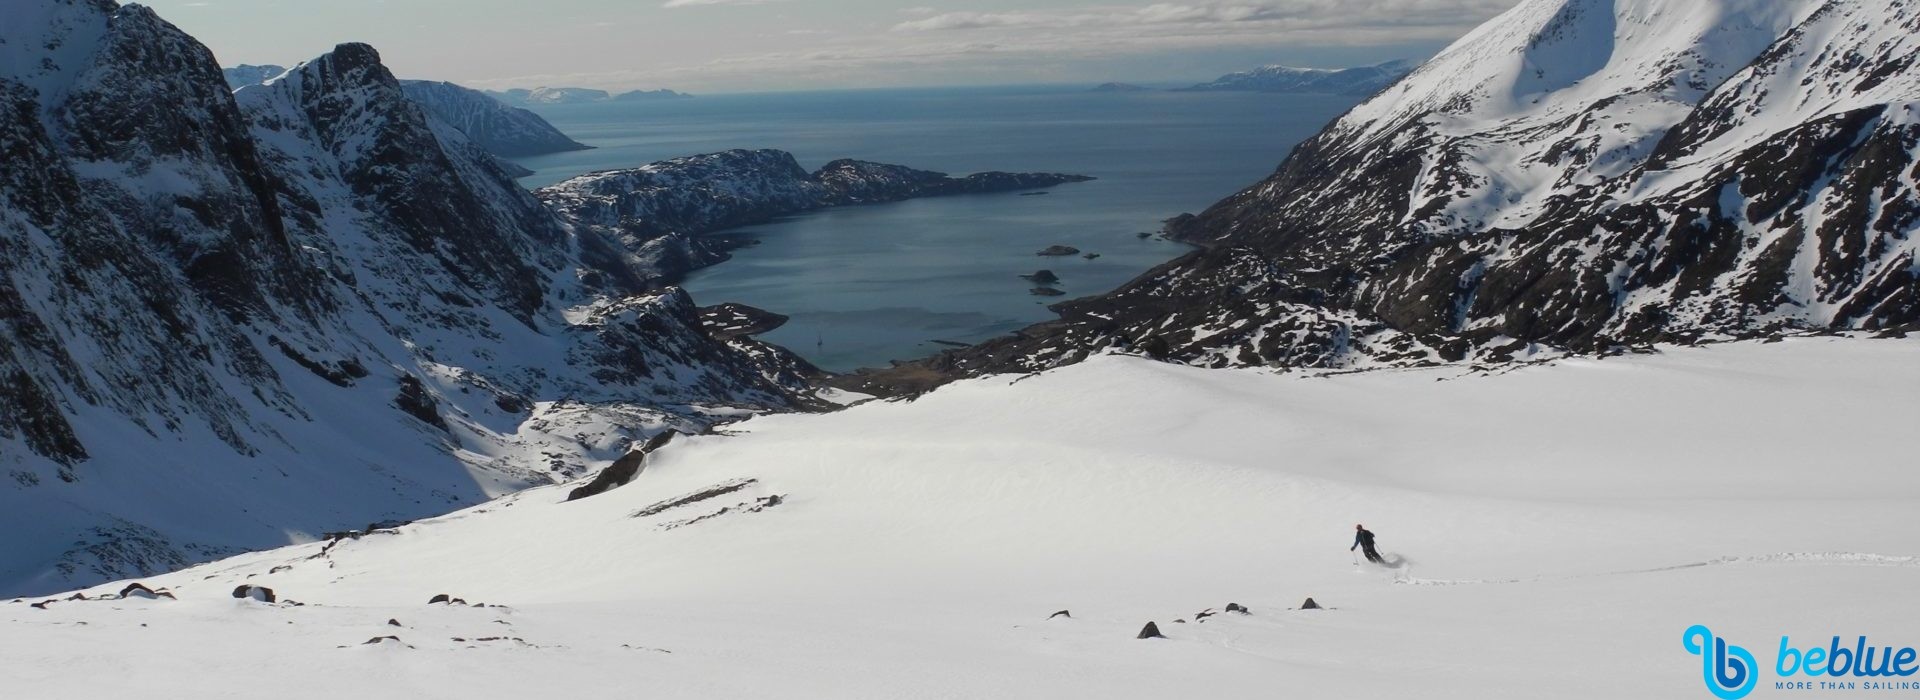 Norvegia, Ski&Sail alle Isole Lofoten